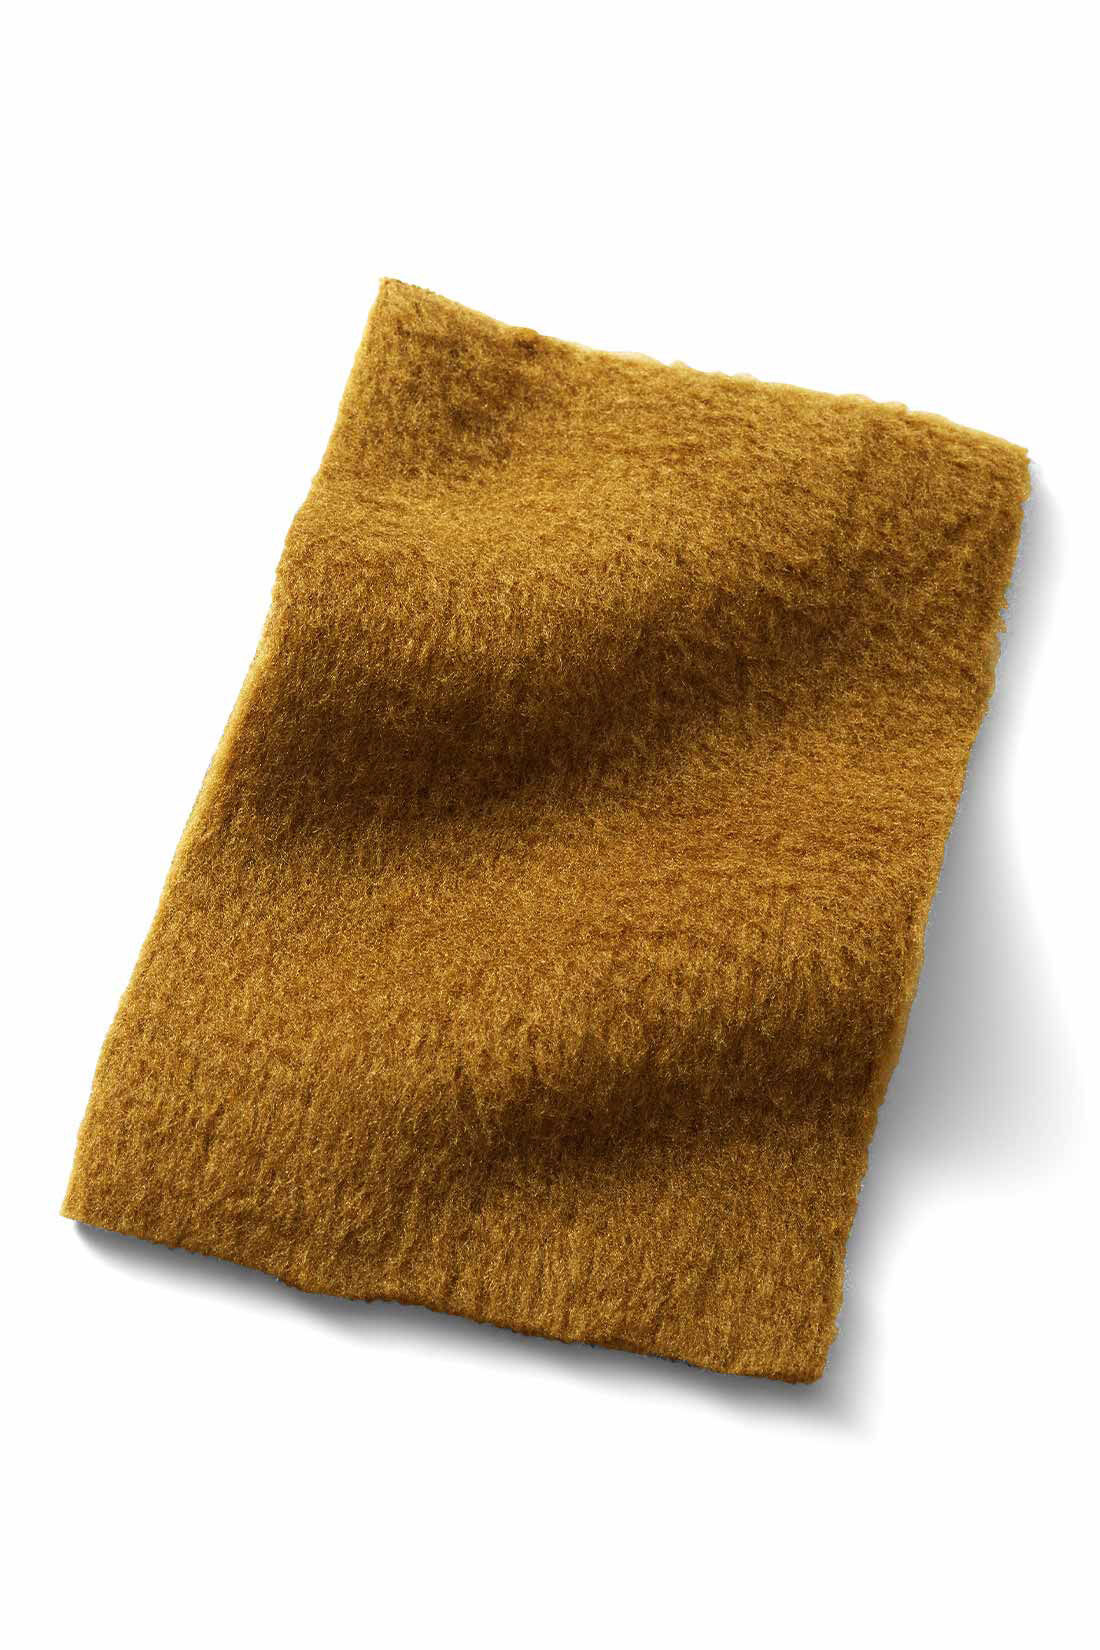 MEDE19F|MEDE19F　やわらかフリースのミリタリーパンツ〈カーキ〉|少し長めの毛足が滑らかであたたかい、やや厚みのあるフリース素材。別布はコントラストを生むポリエステル素材。